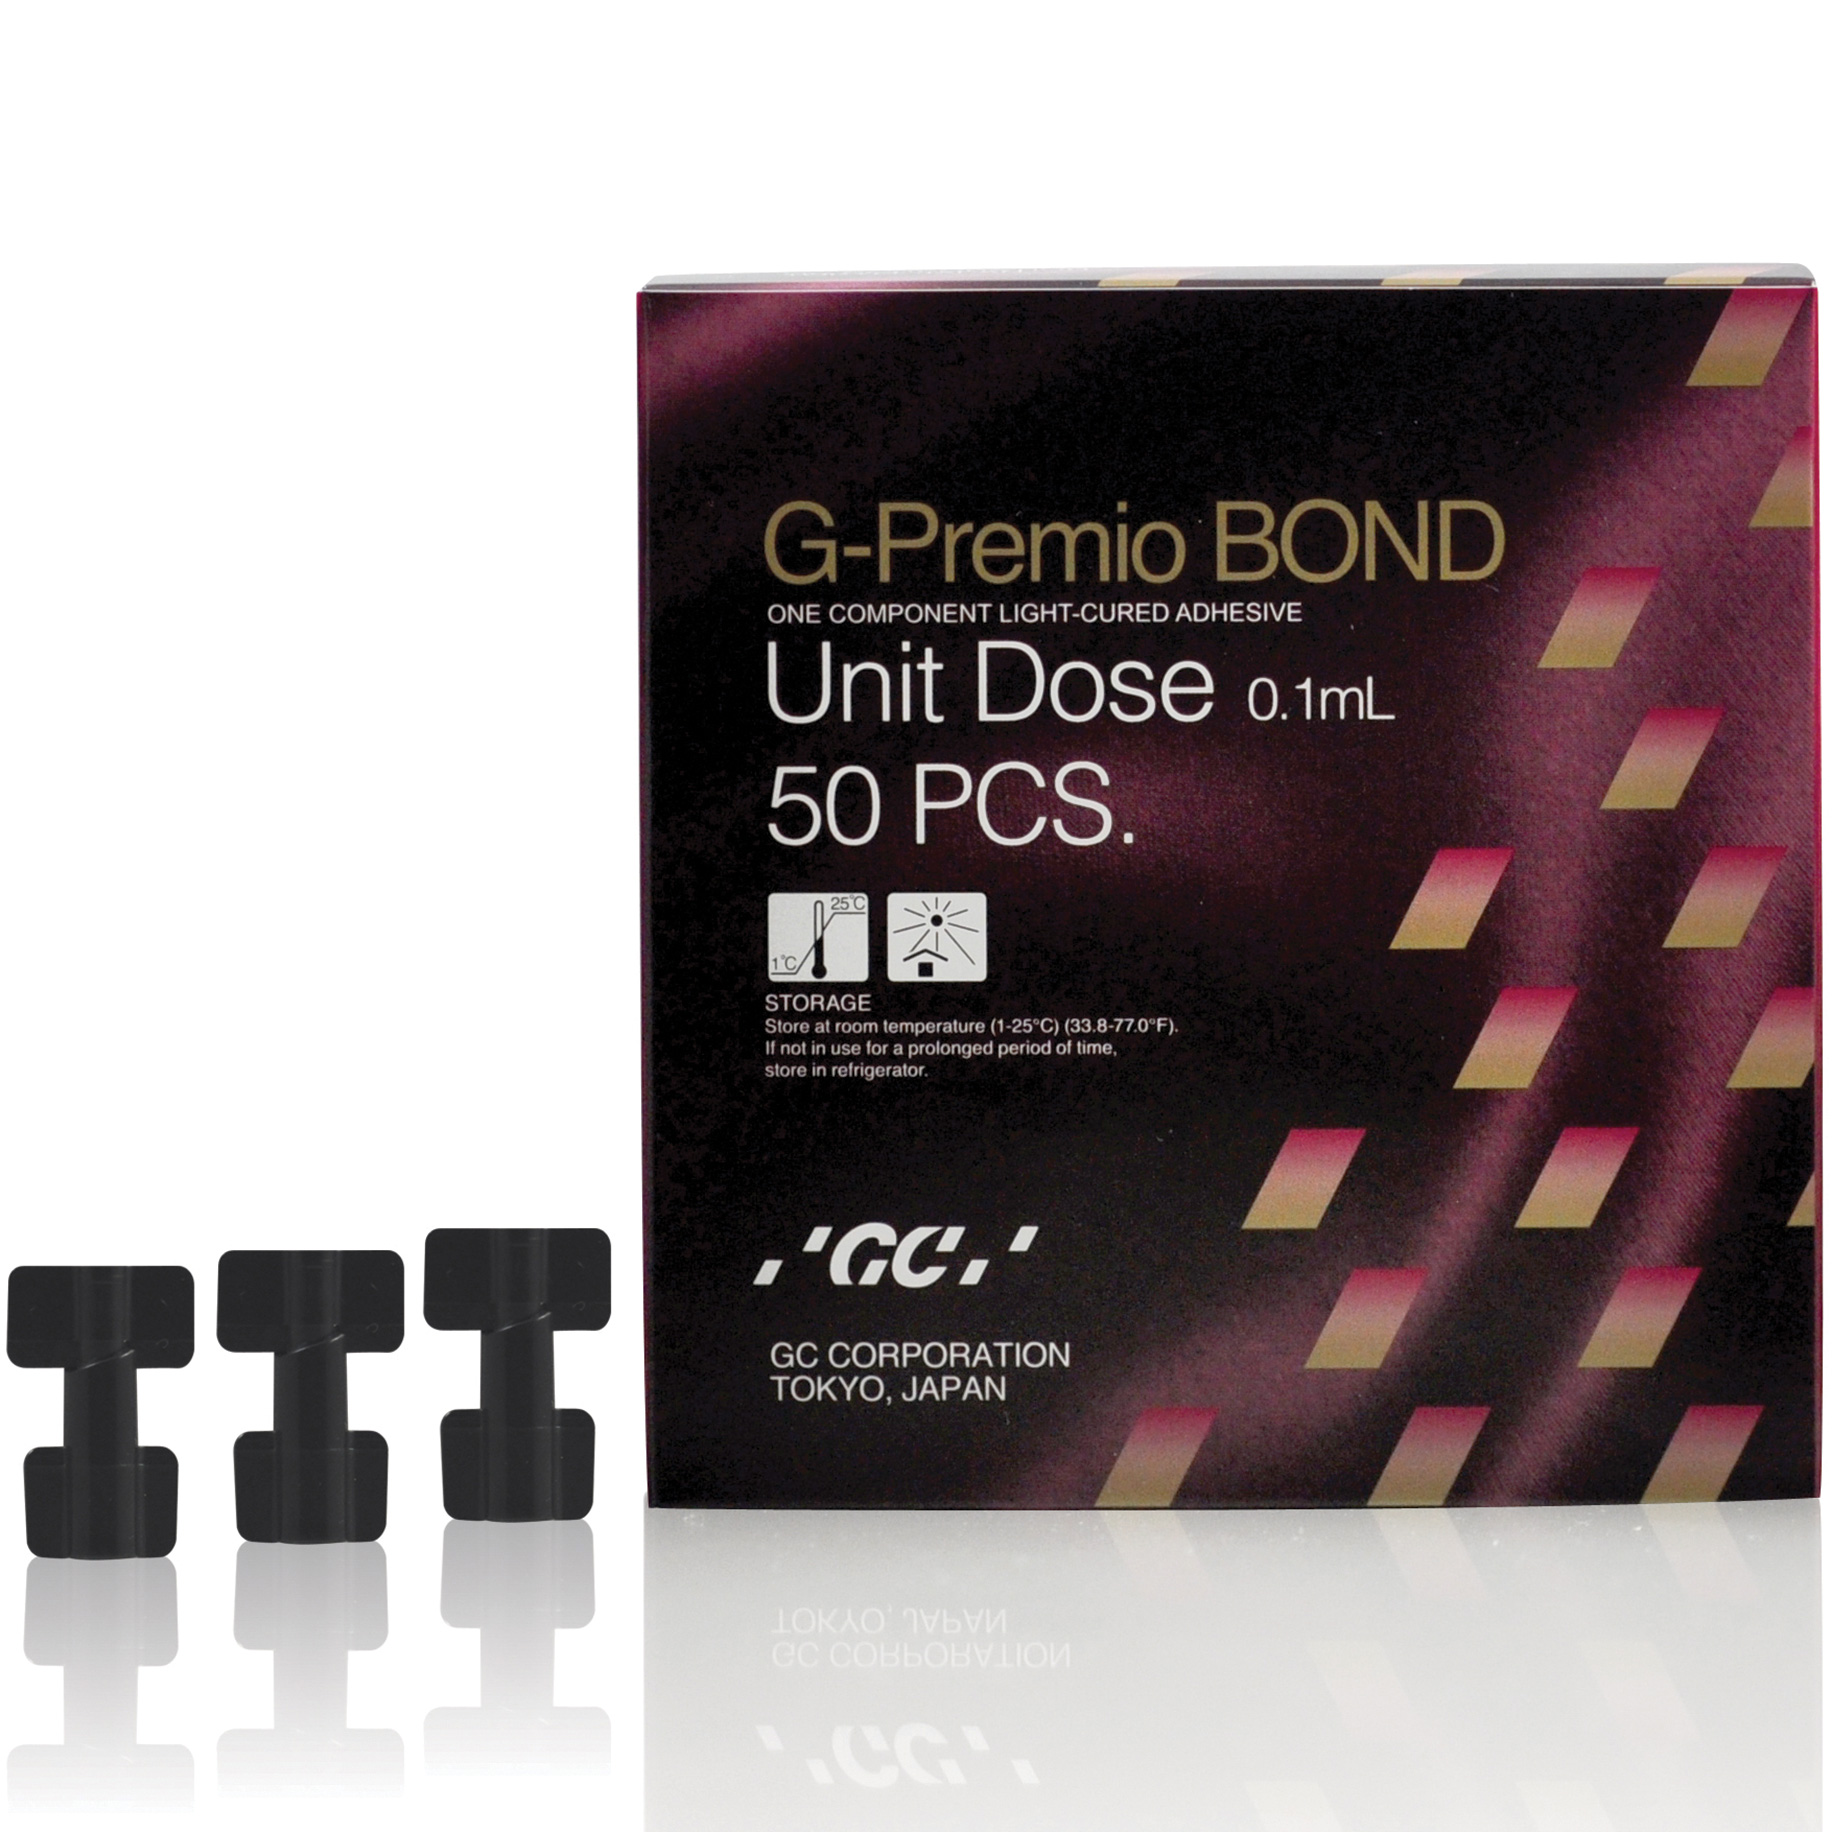 G-Premio Bond Unit Dose 